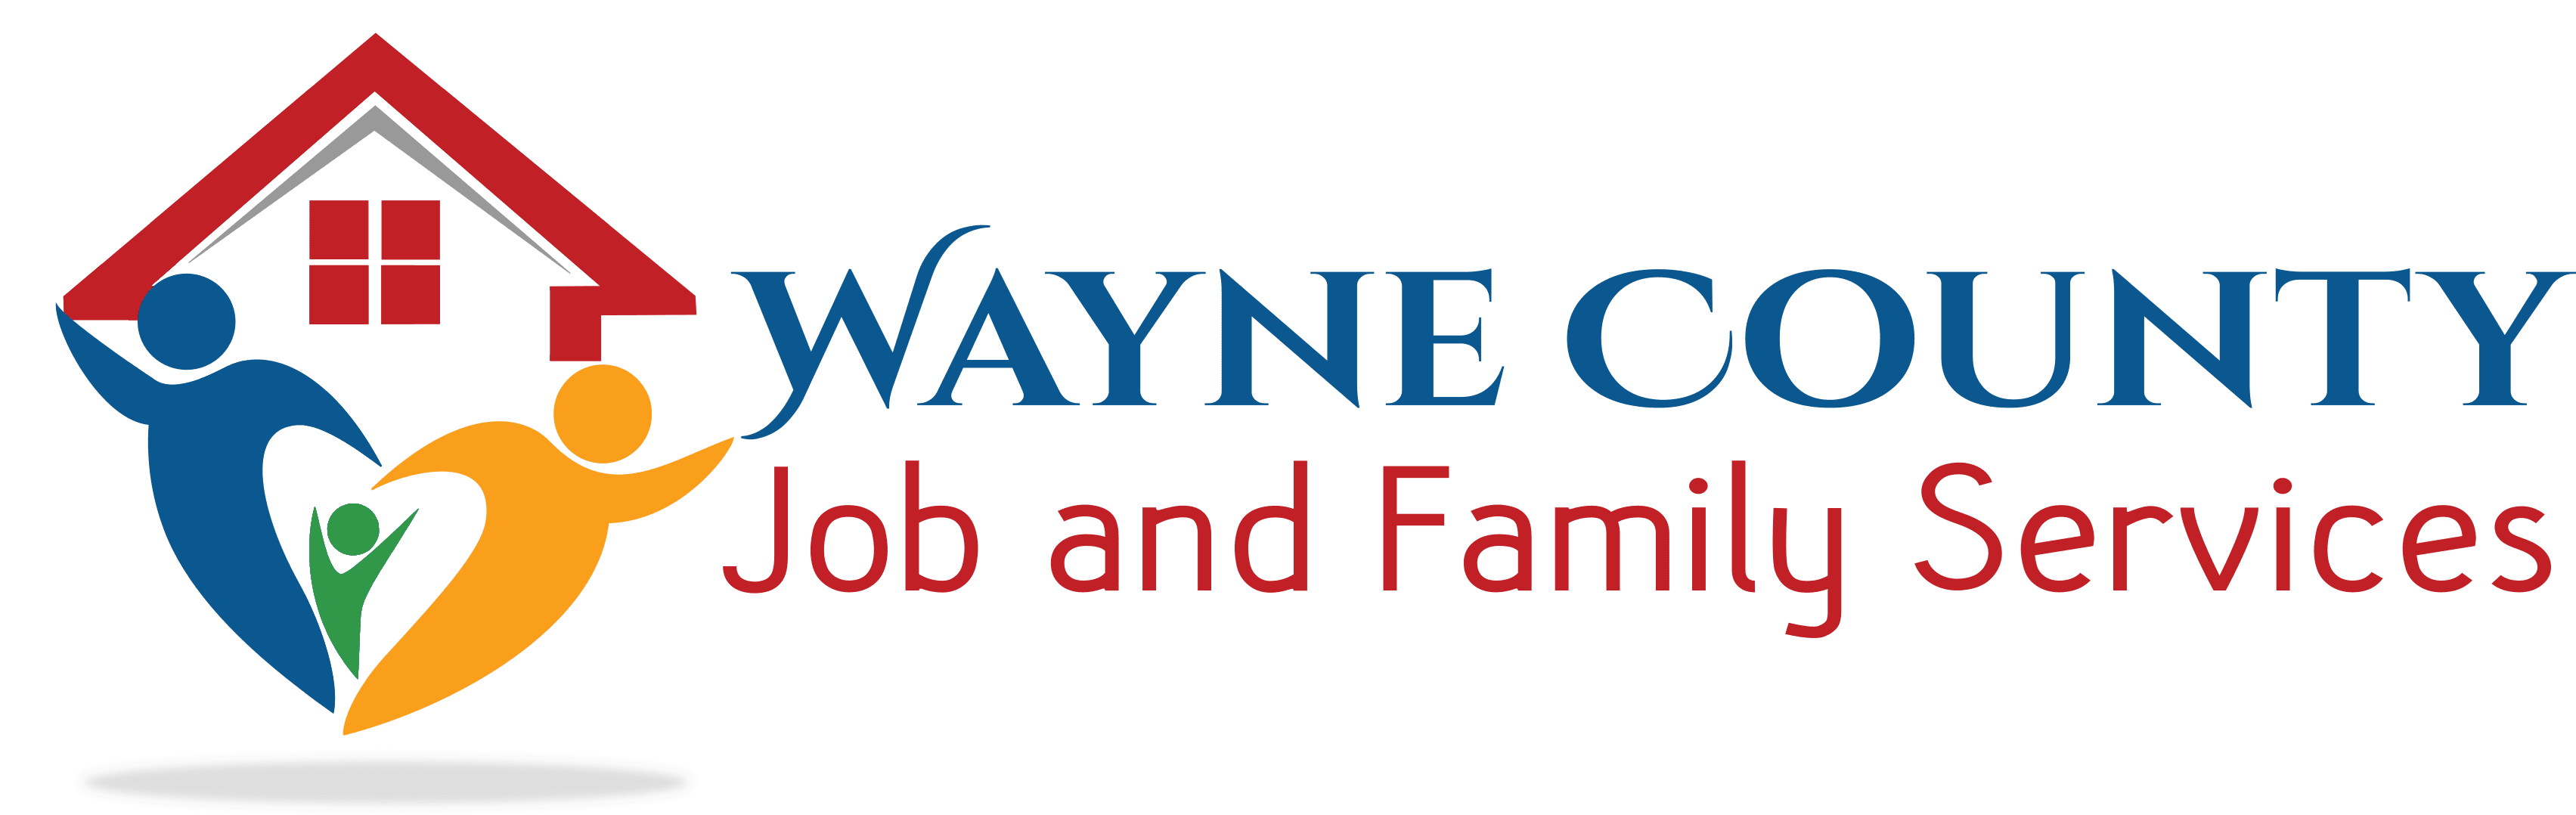 Wayne County Job and Family Services